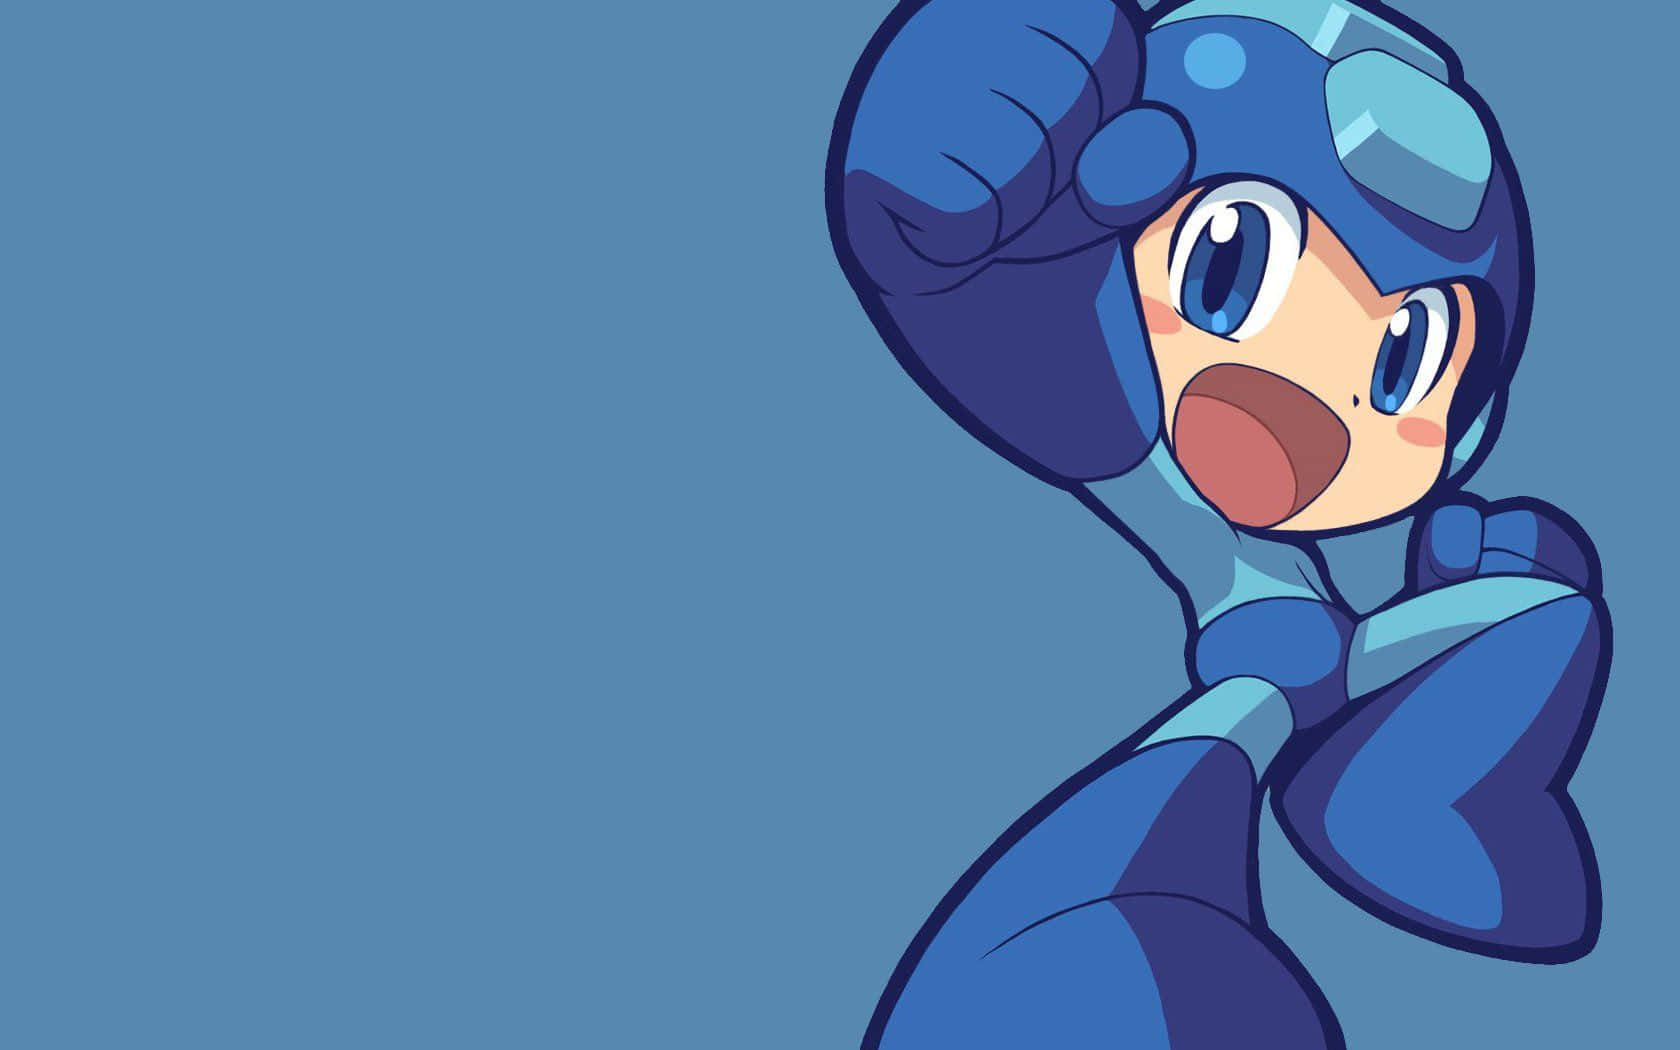 Chibi Mega Man Smiling Pumping His Fist Wallpaper